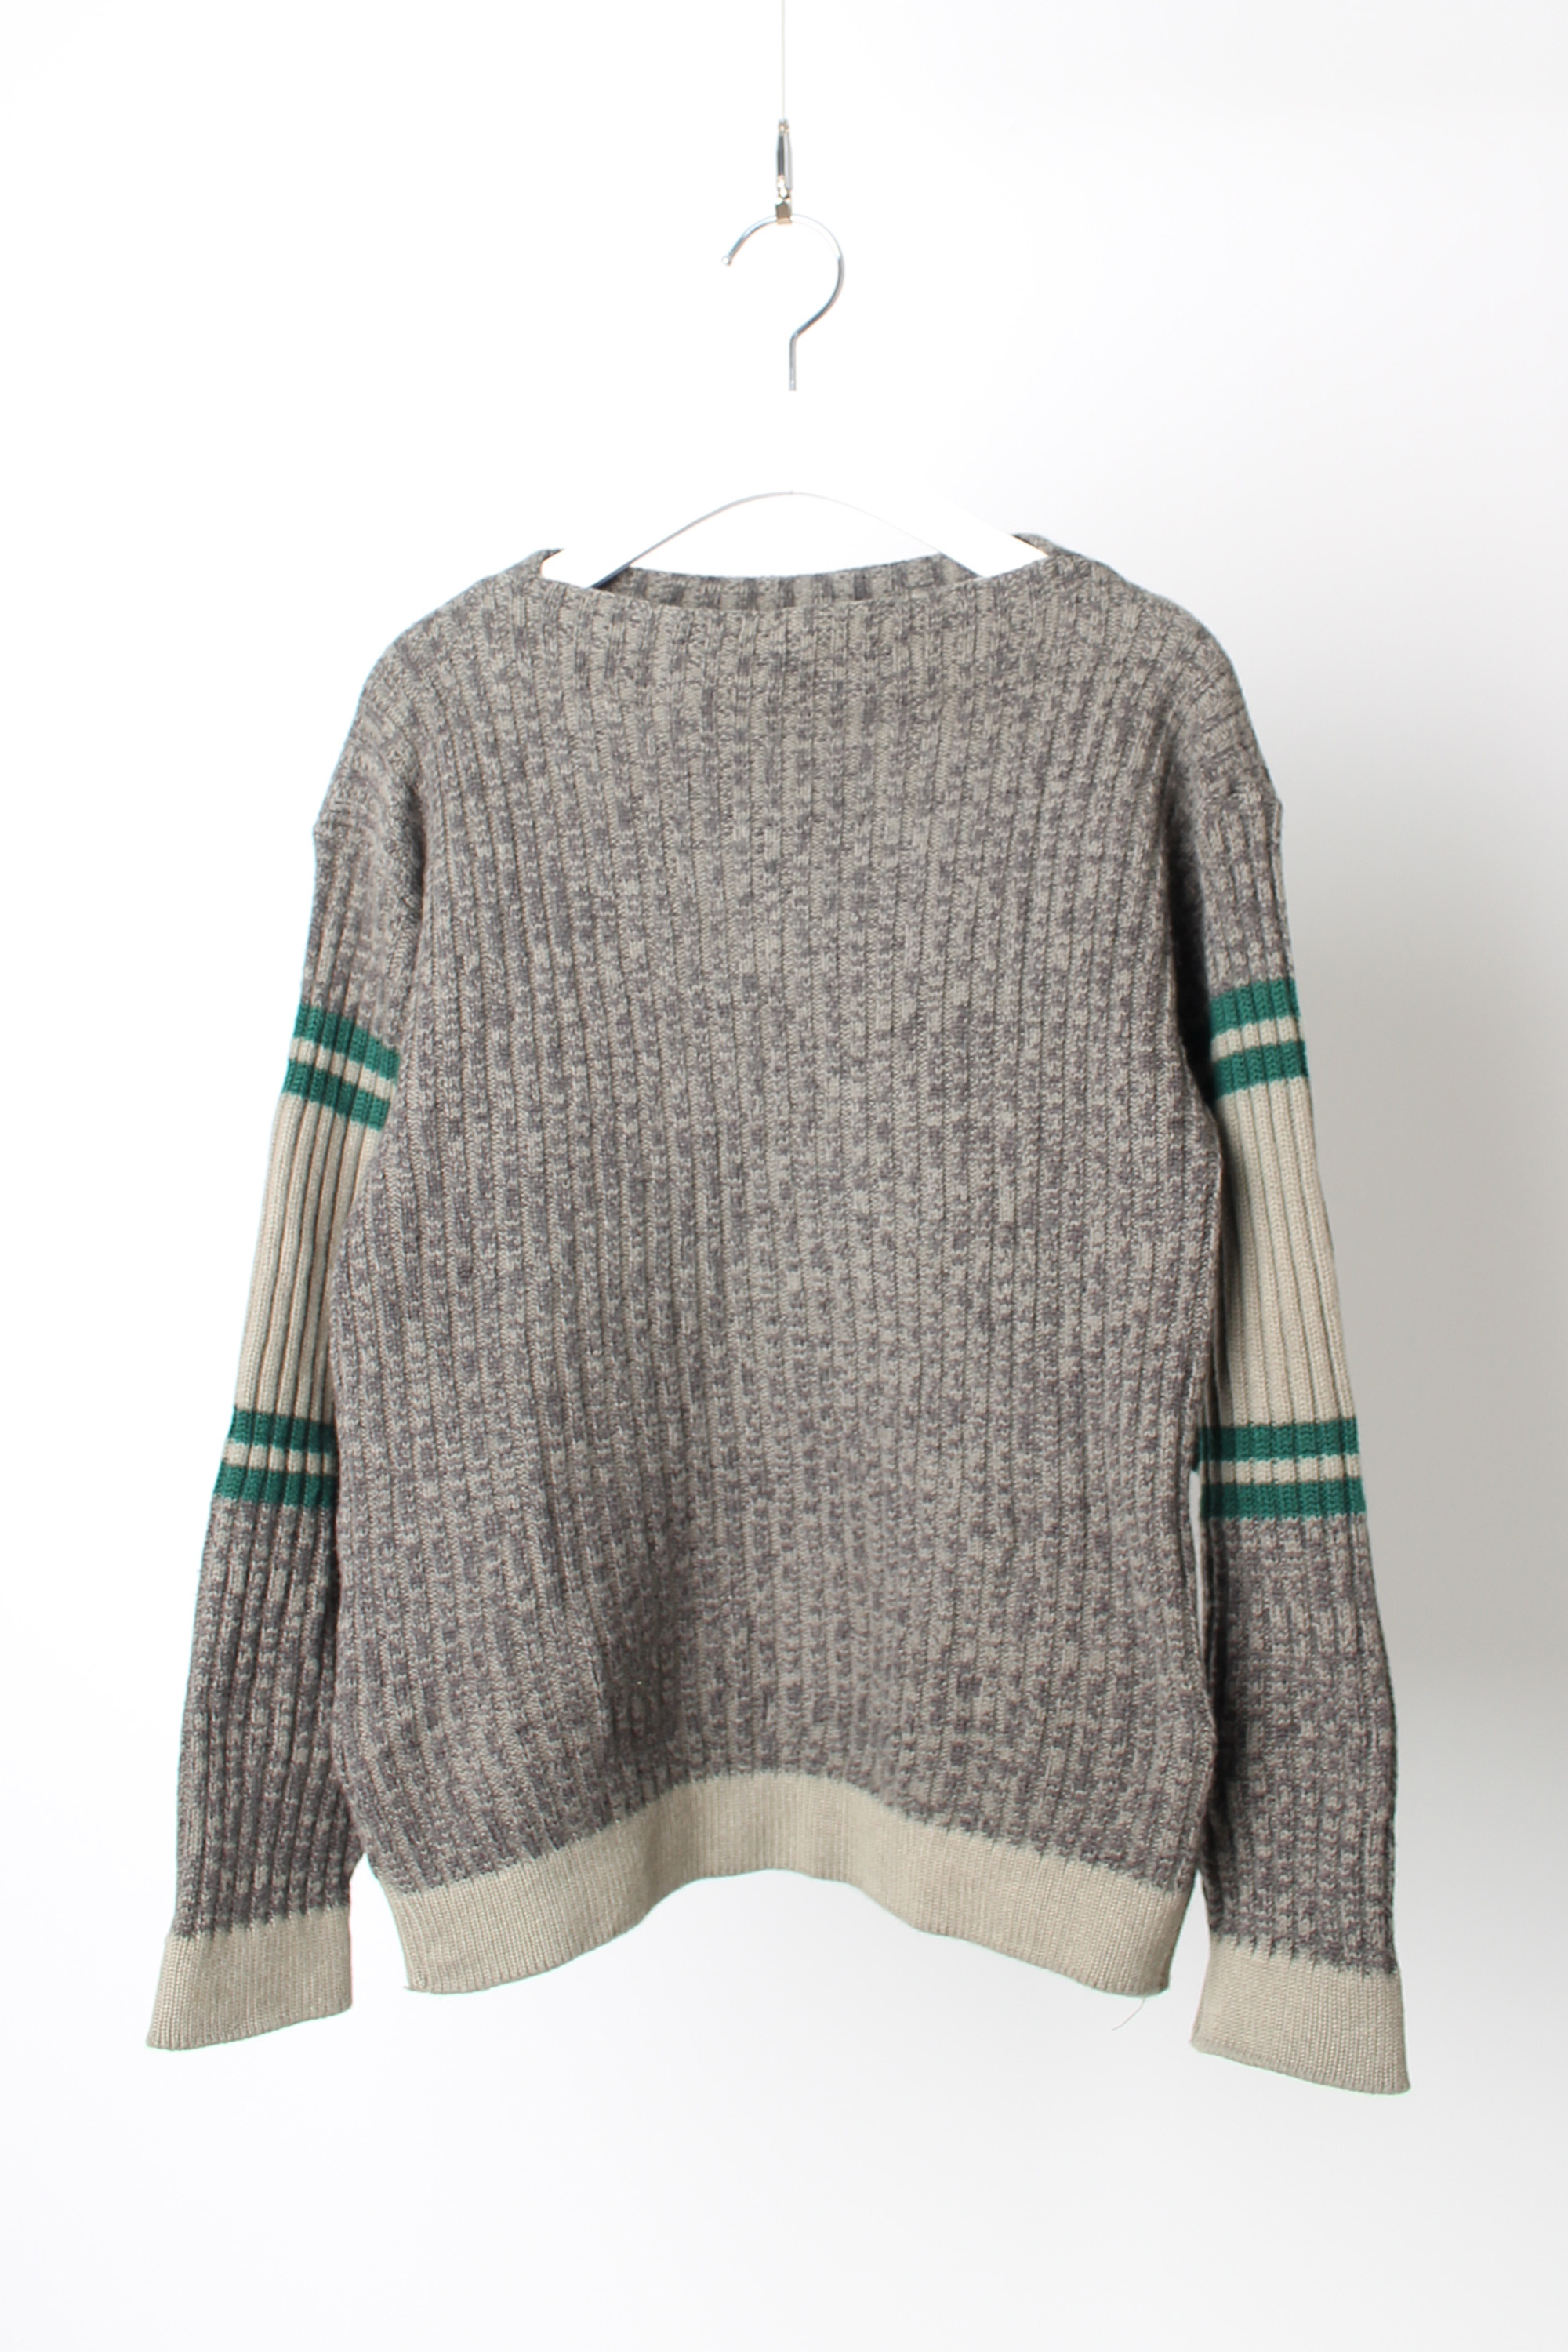 vintage C.P. COMPANY sweater